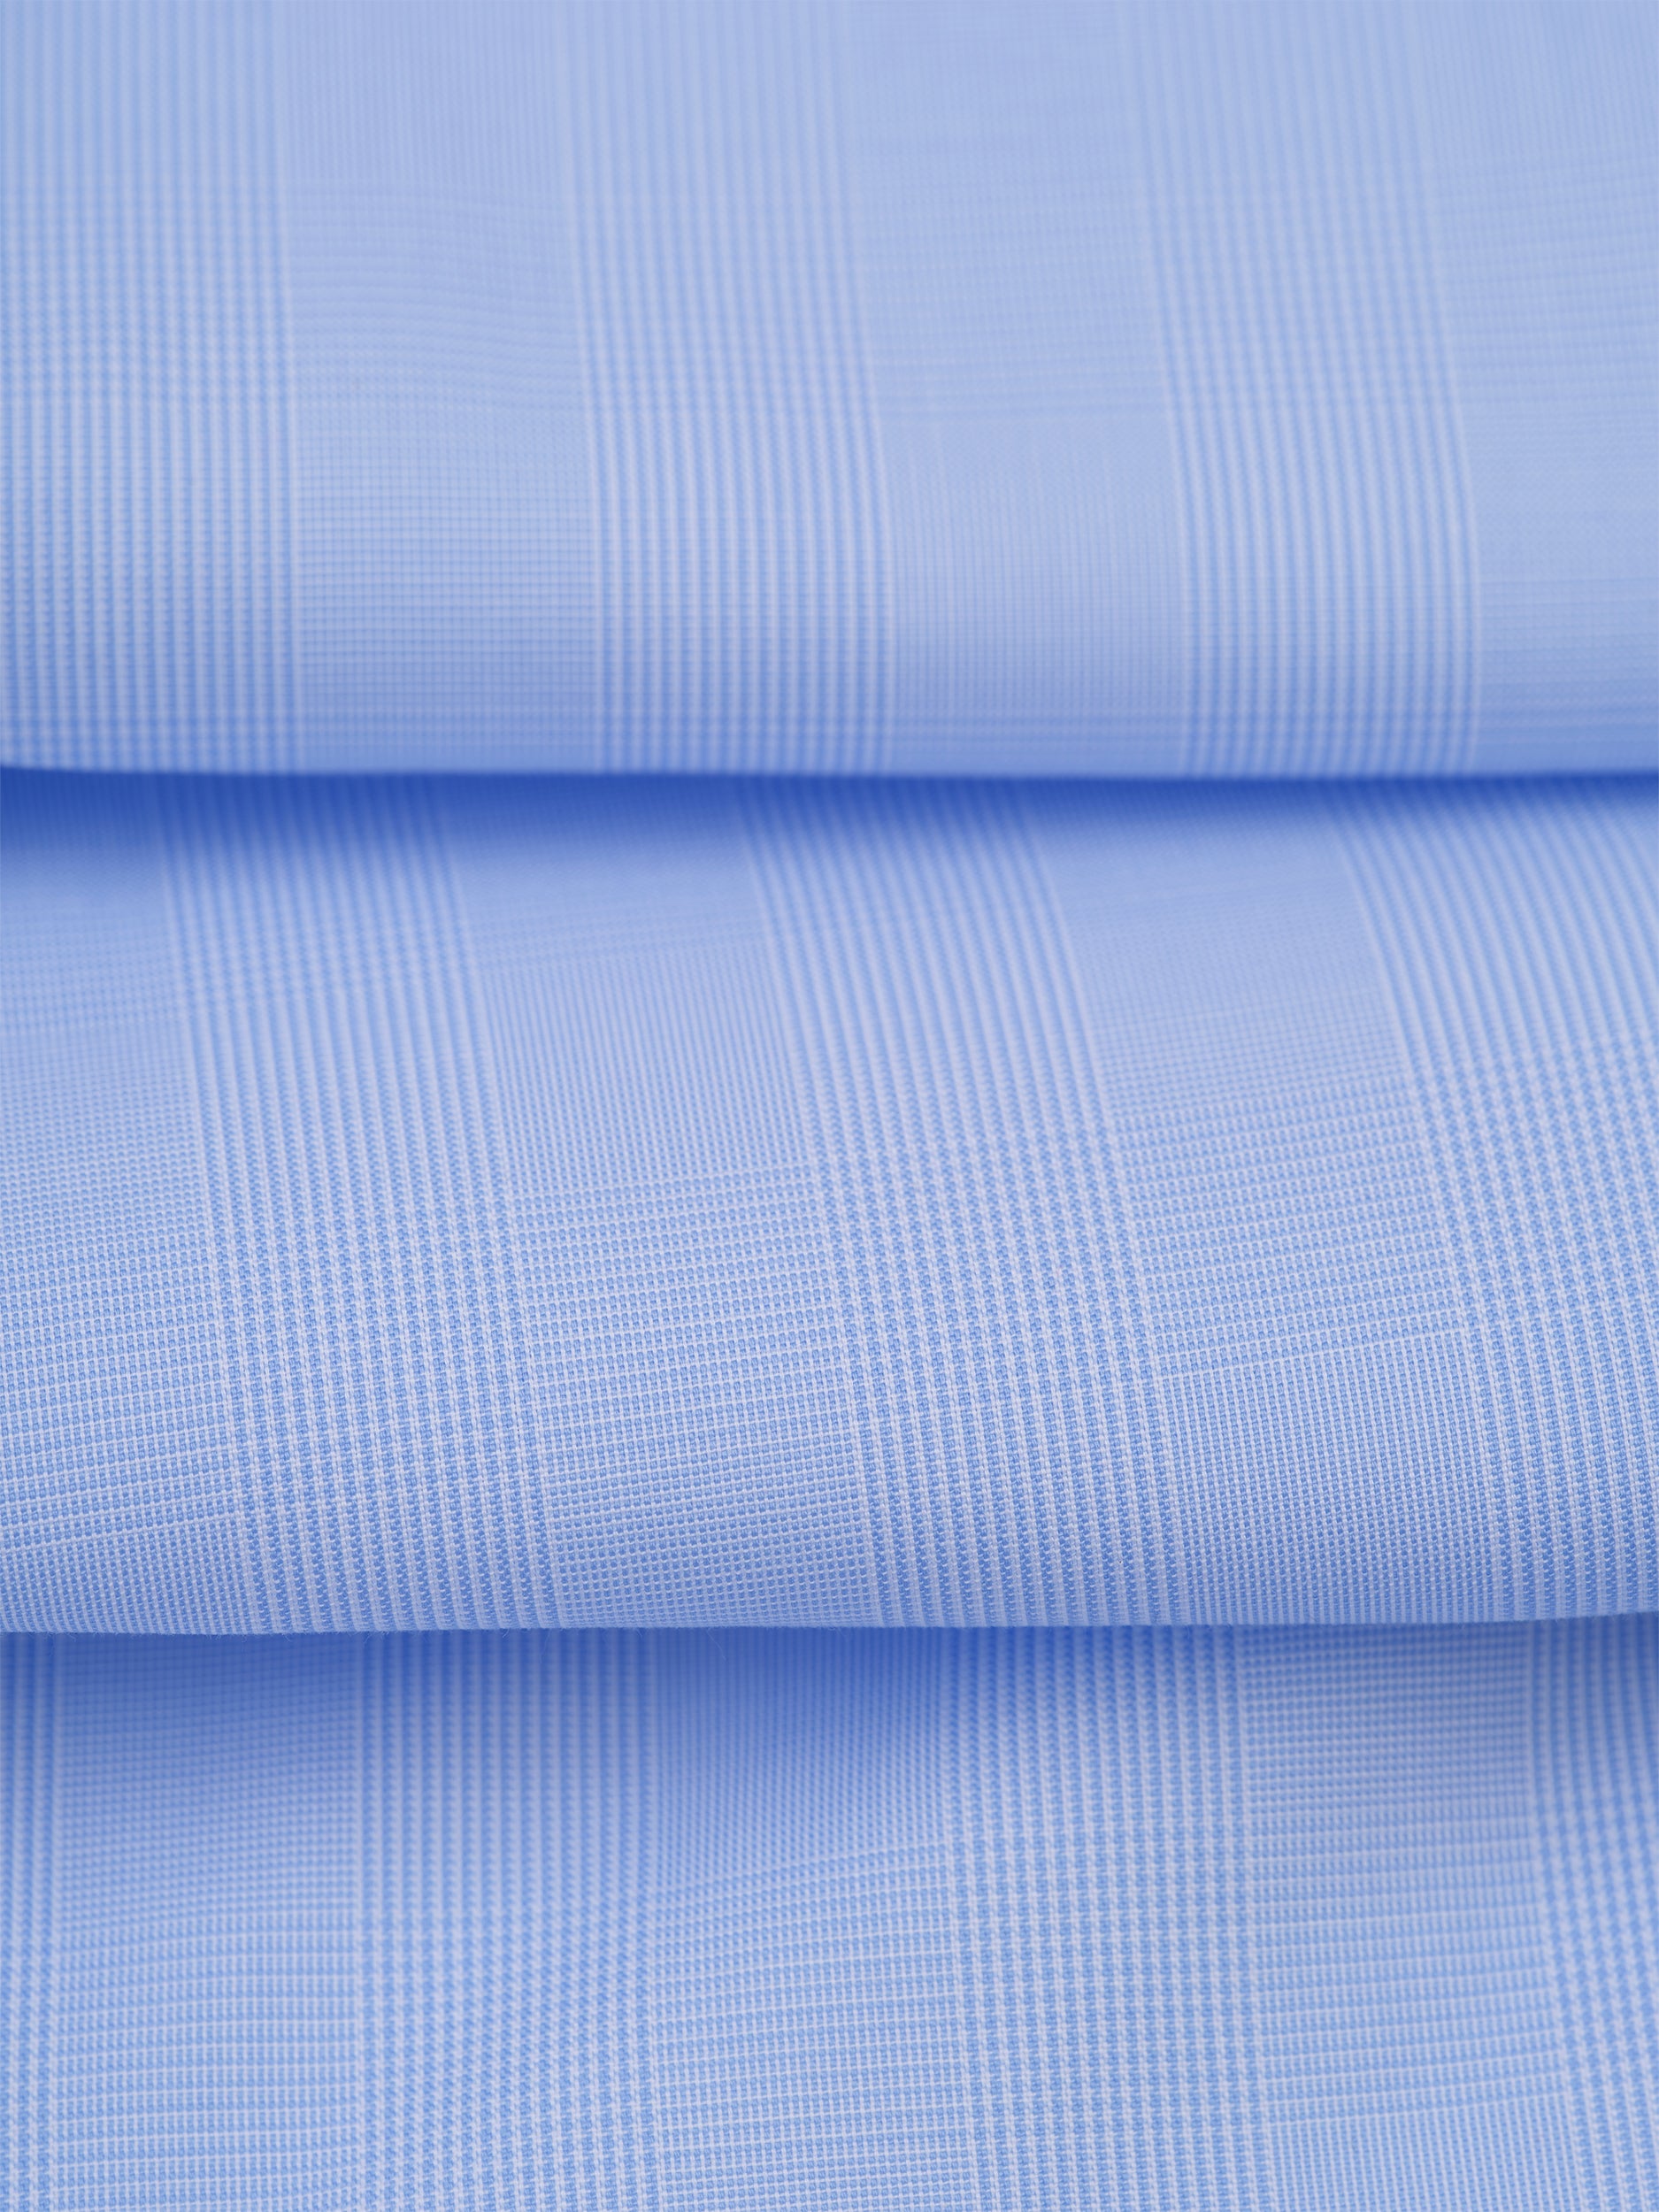 Light Blue Plaid Cotton Shirt - Oscar Hunt